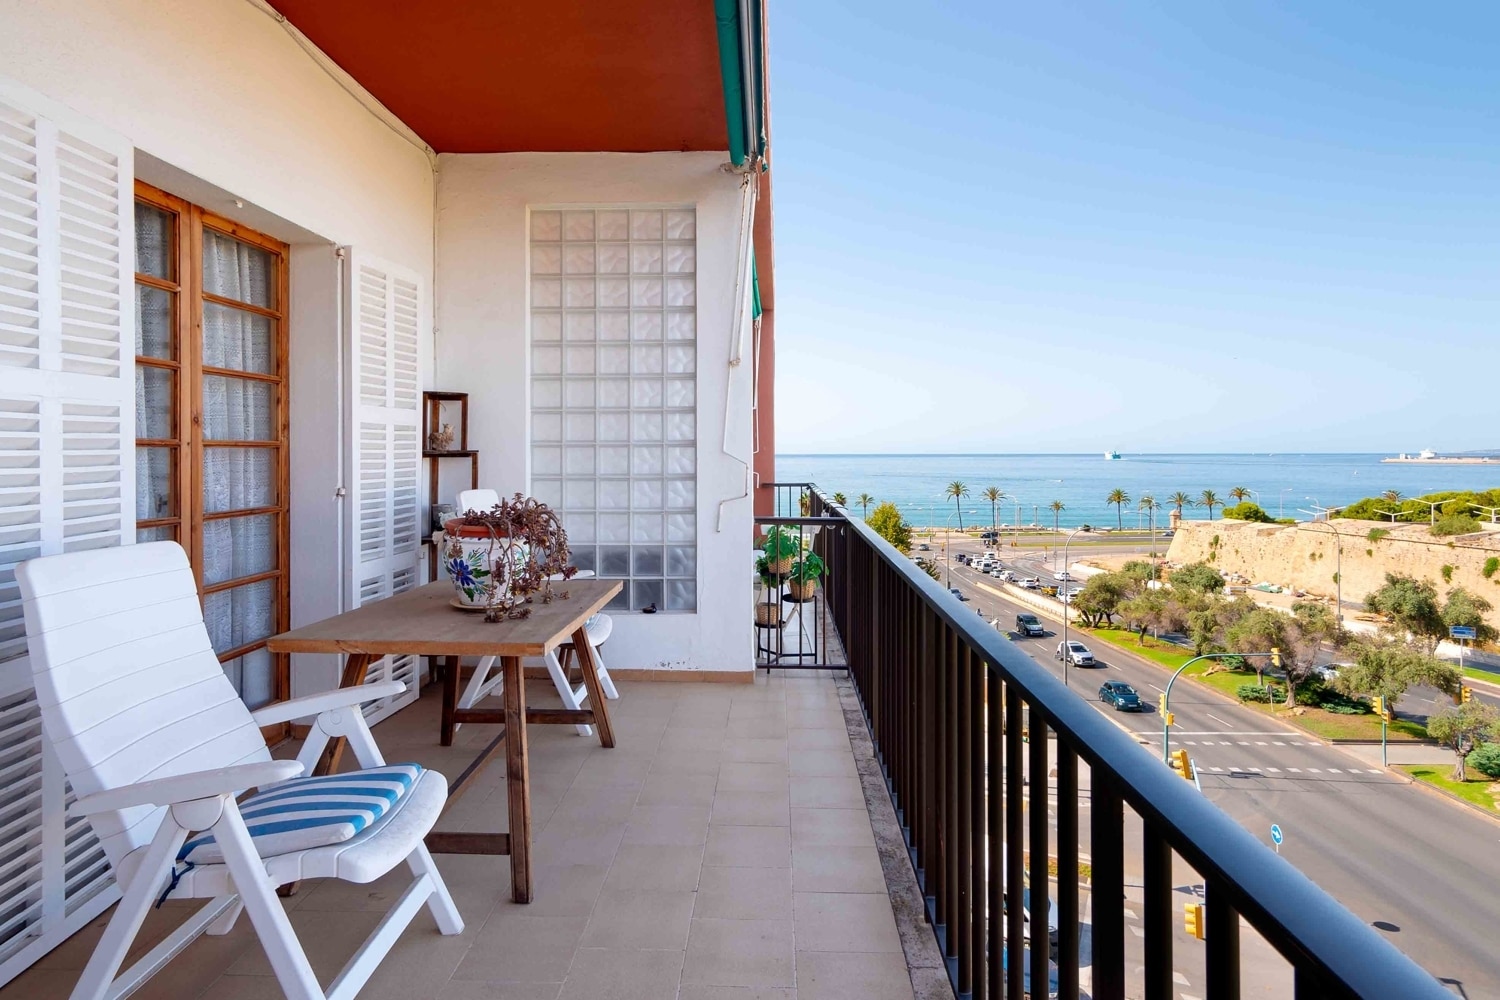 OPPORTUNITY! Spacious penthouse in front of Parc de la Mar with sea views in Palma de Mallorca